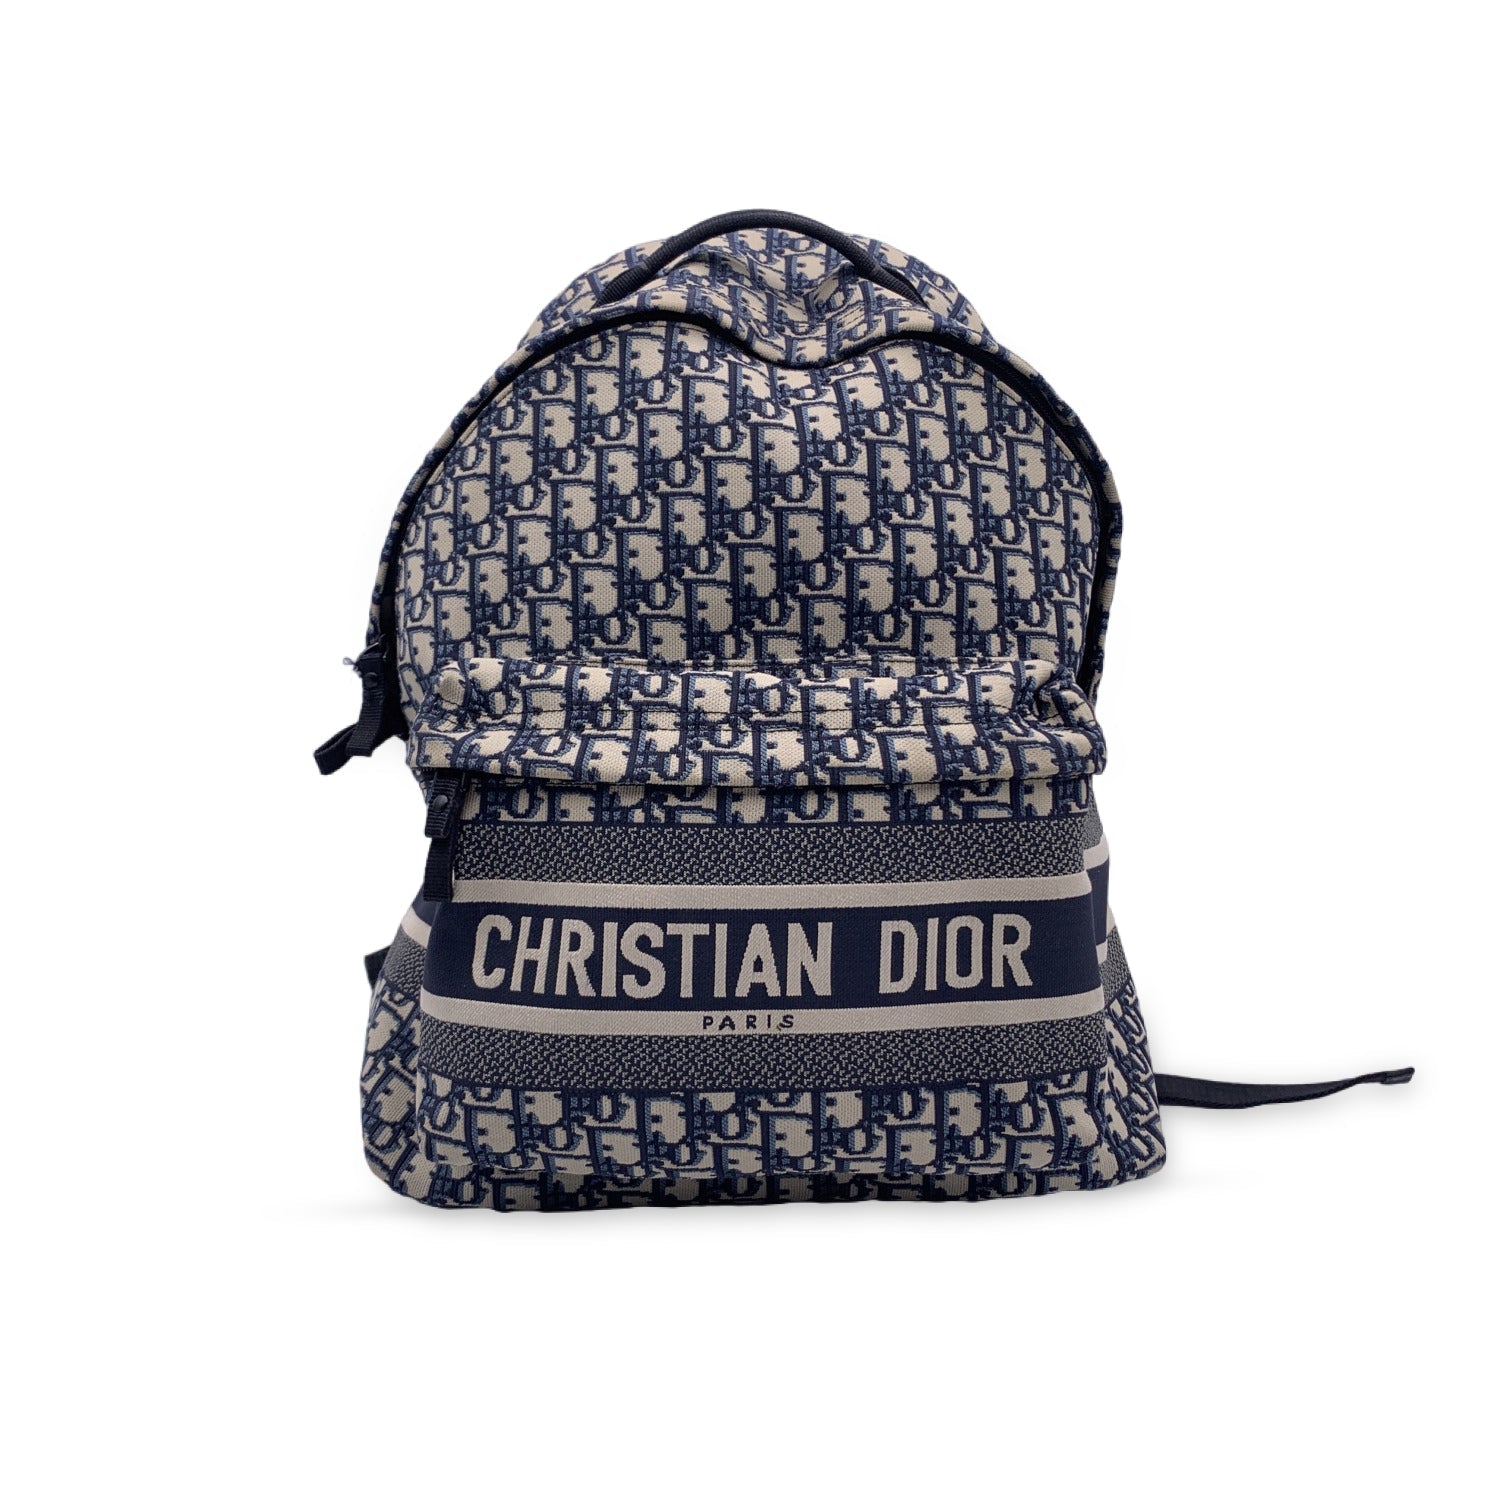 CHRISTIAN DIOR Backpacks